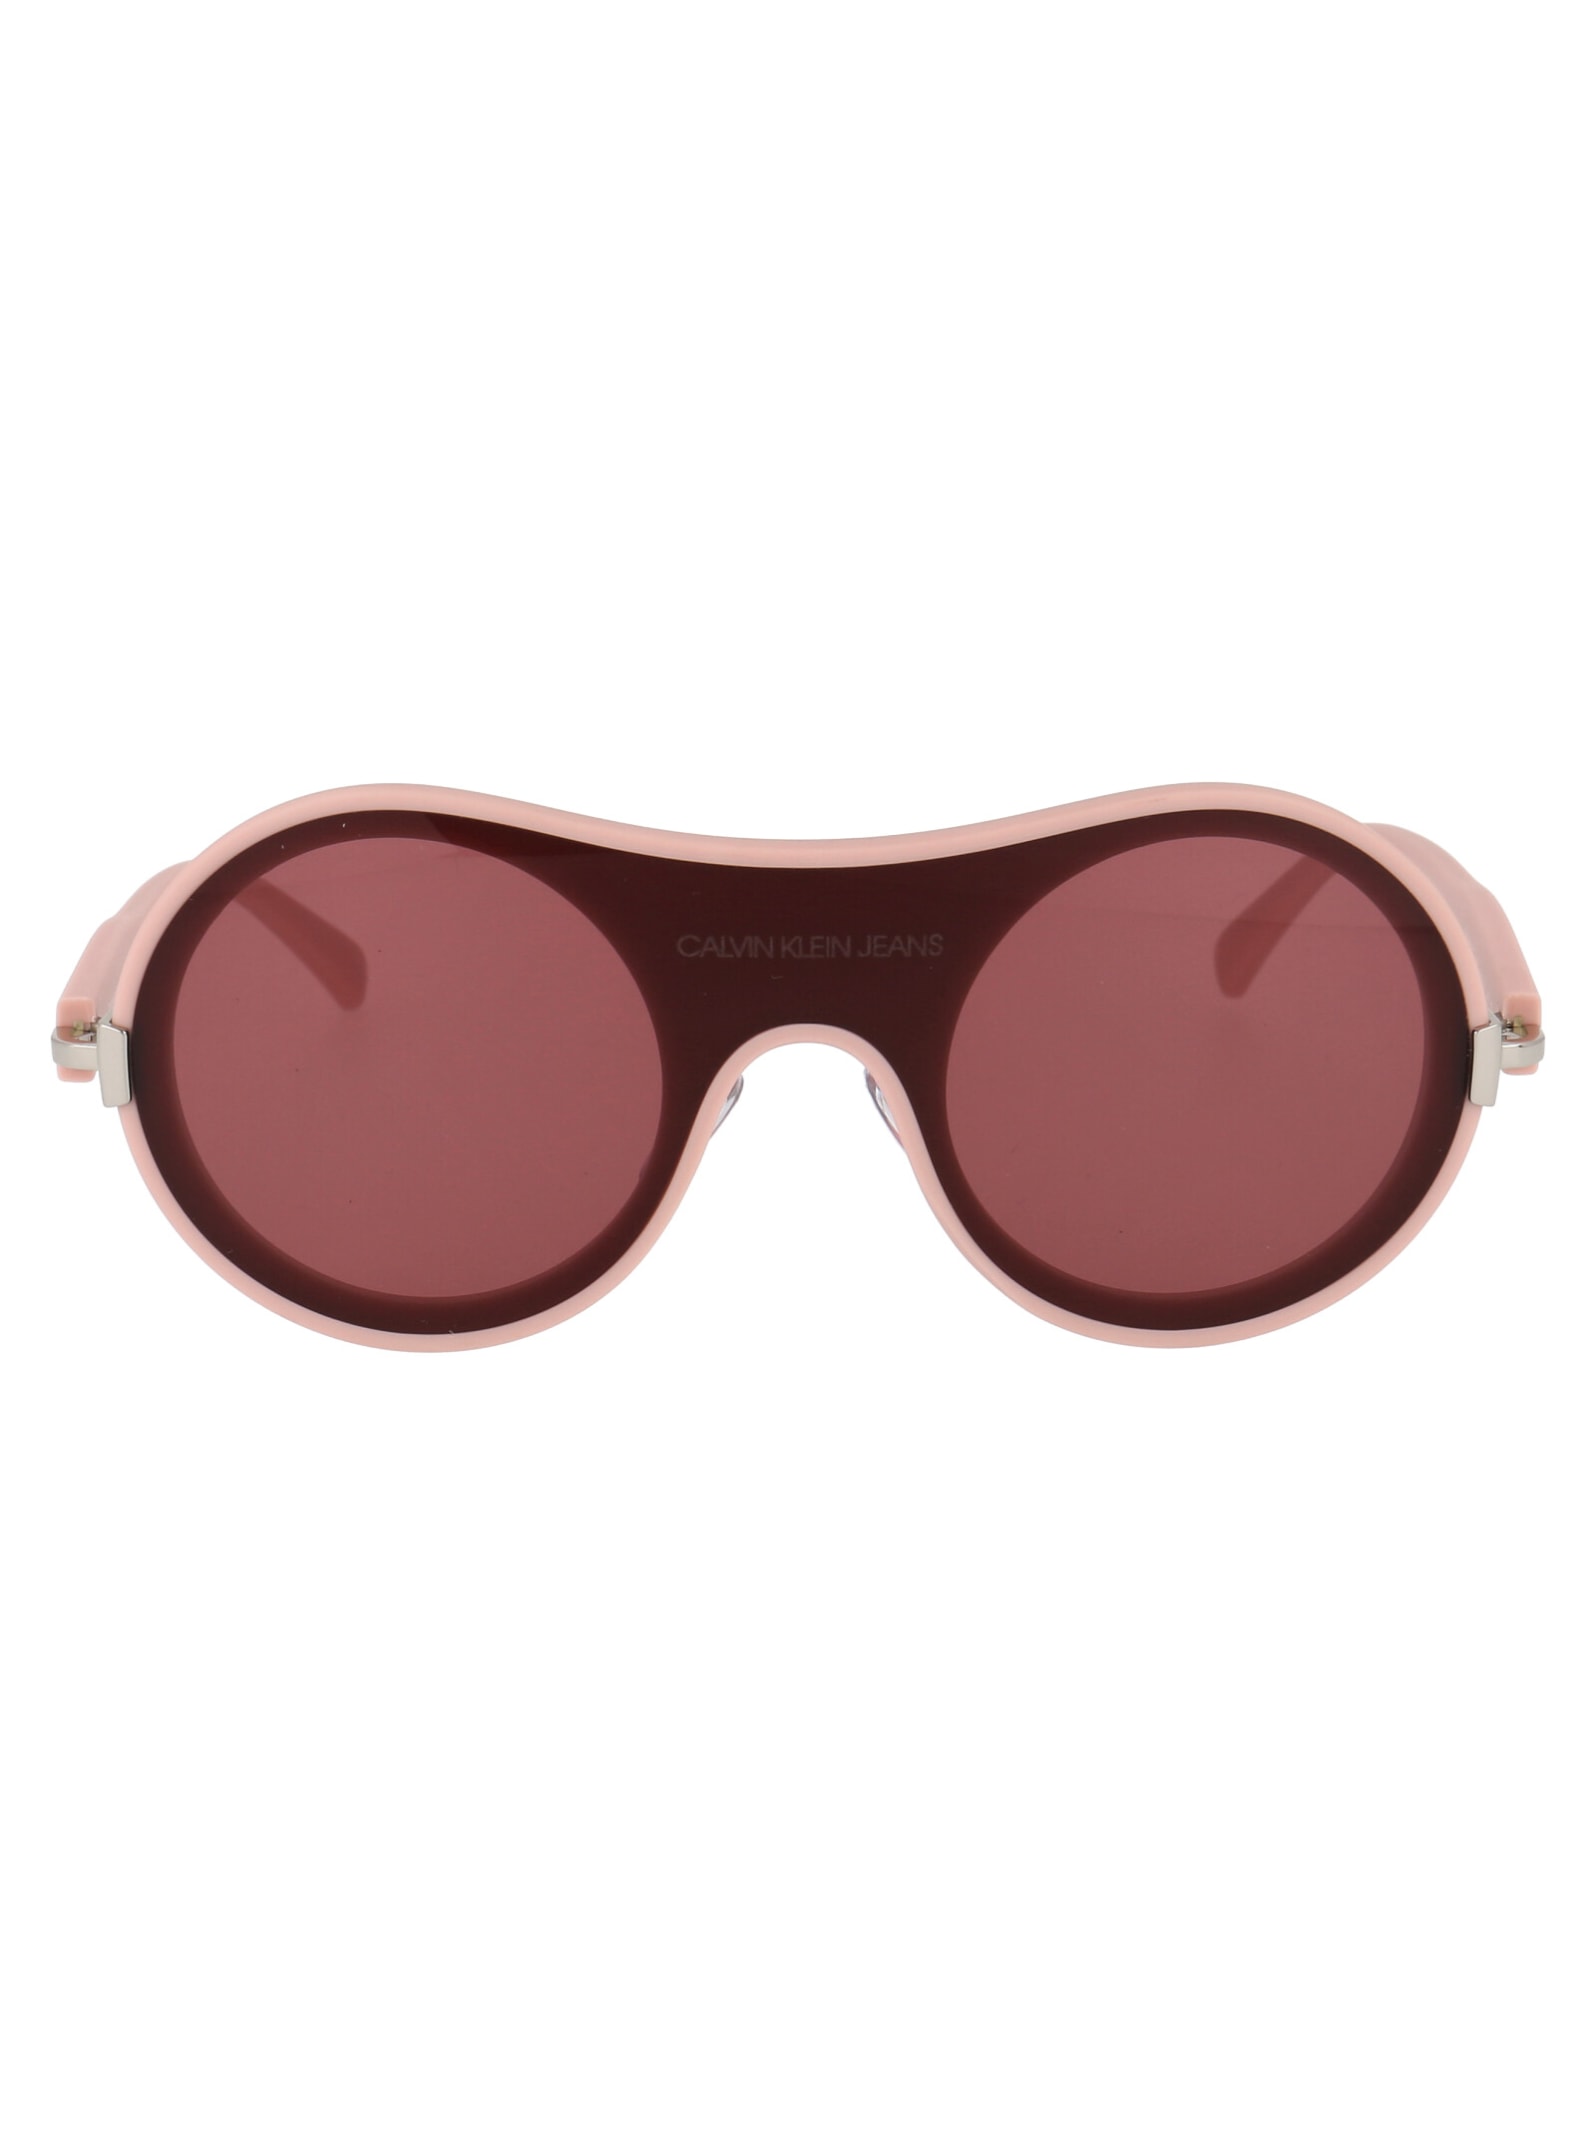 Calvin Klein Jeans Est.1978 Ck18507s Sunglasses In 670 Matte Light Pink